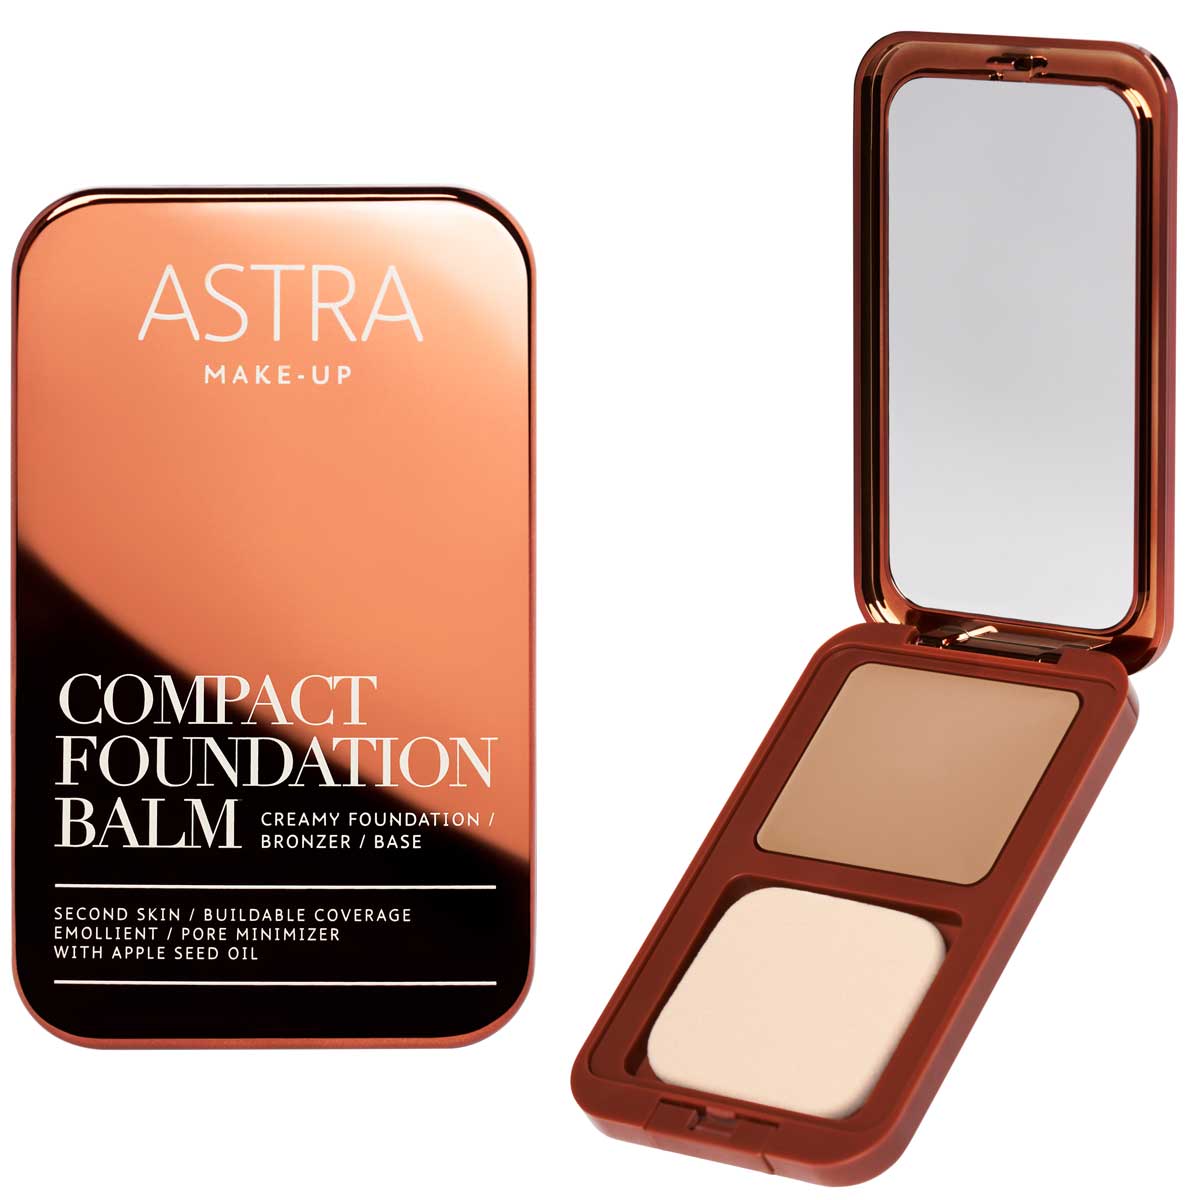 Astra Make-Up fondotinta compatto